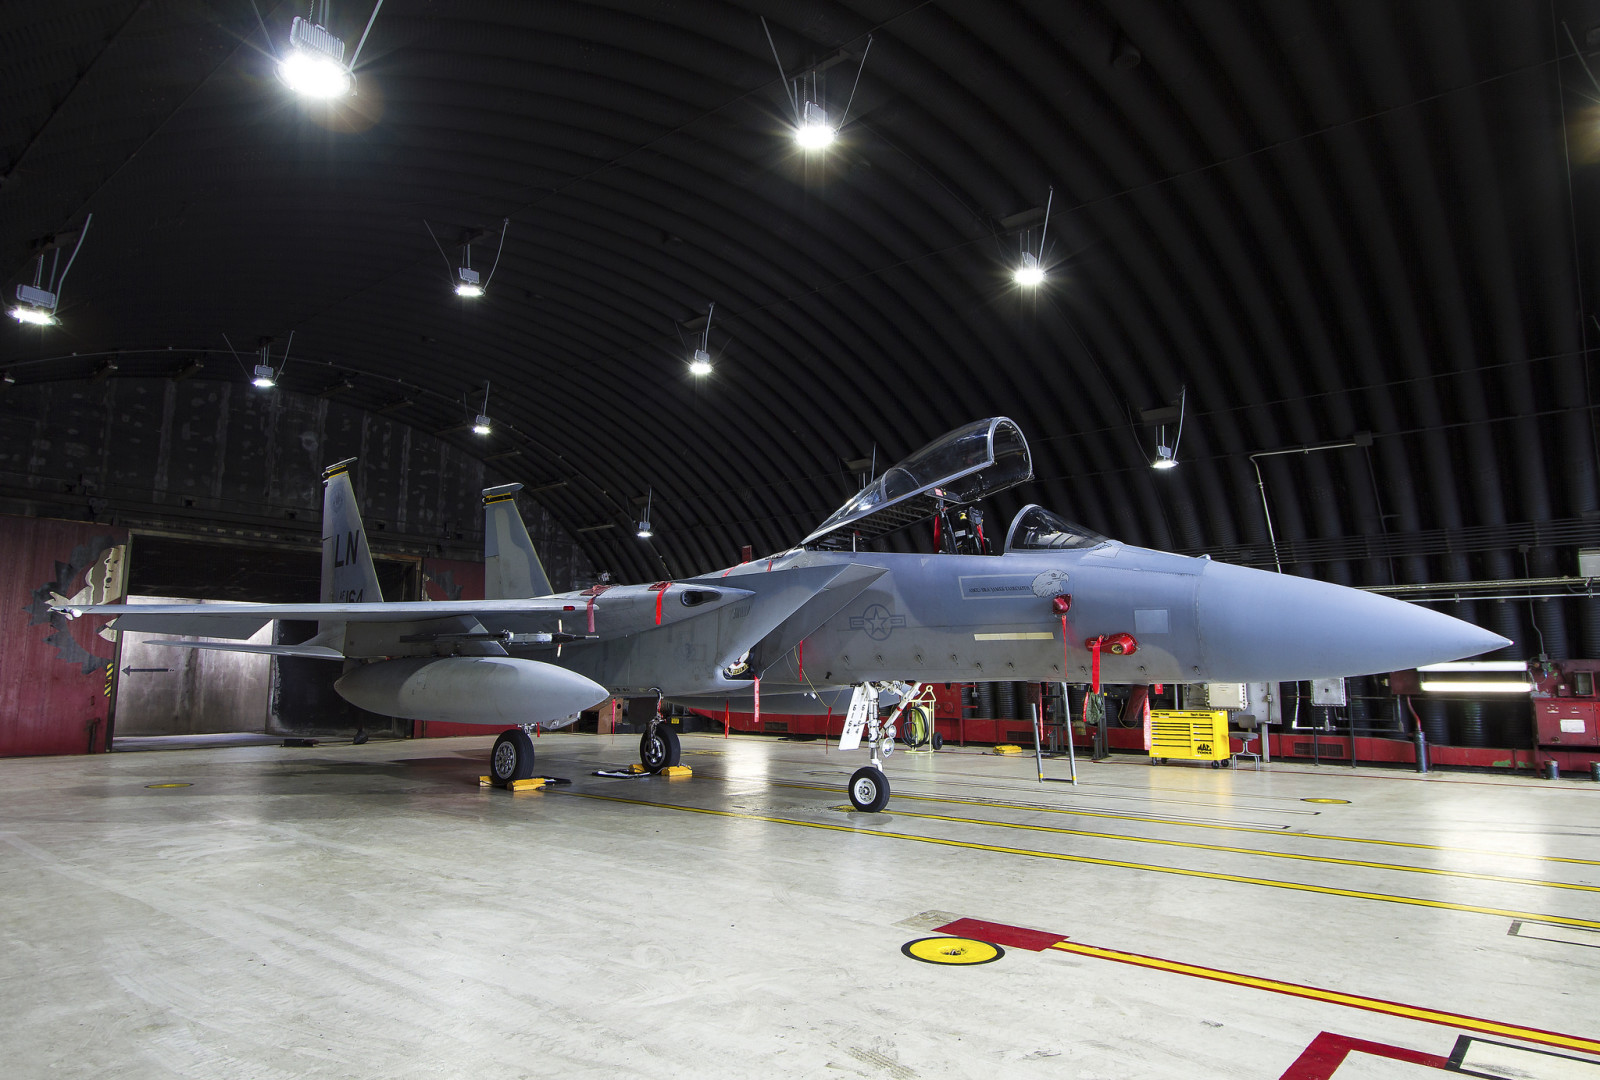 Hangar, Pejuang, Burung rajawali, "Burung rajawali", F-15D